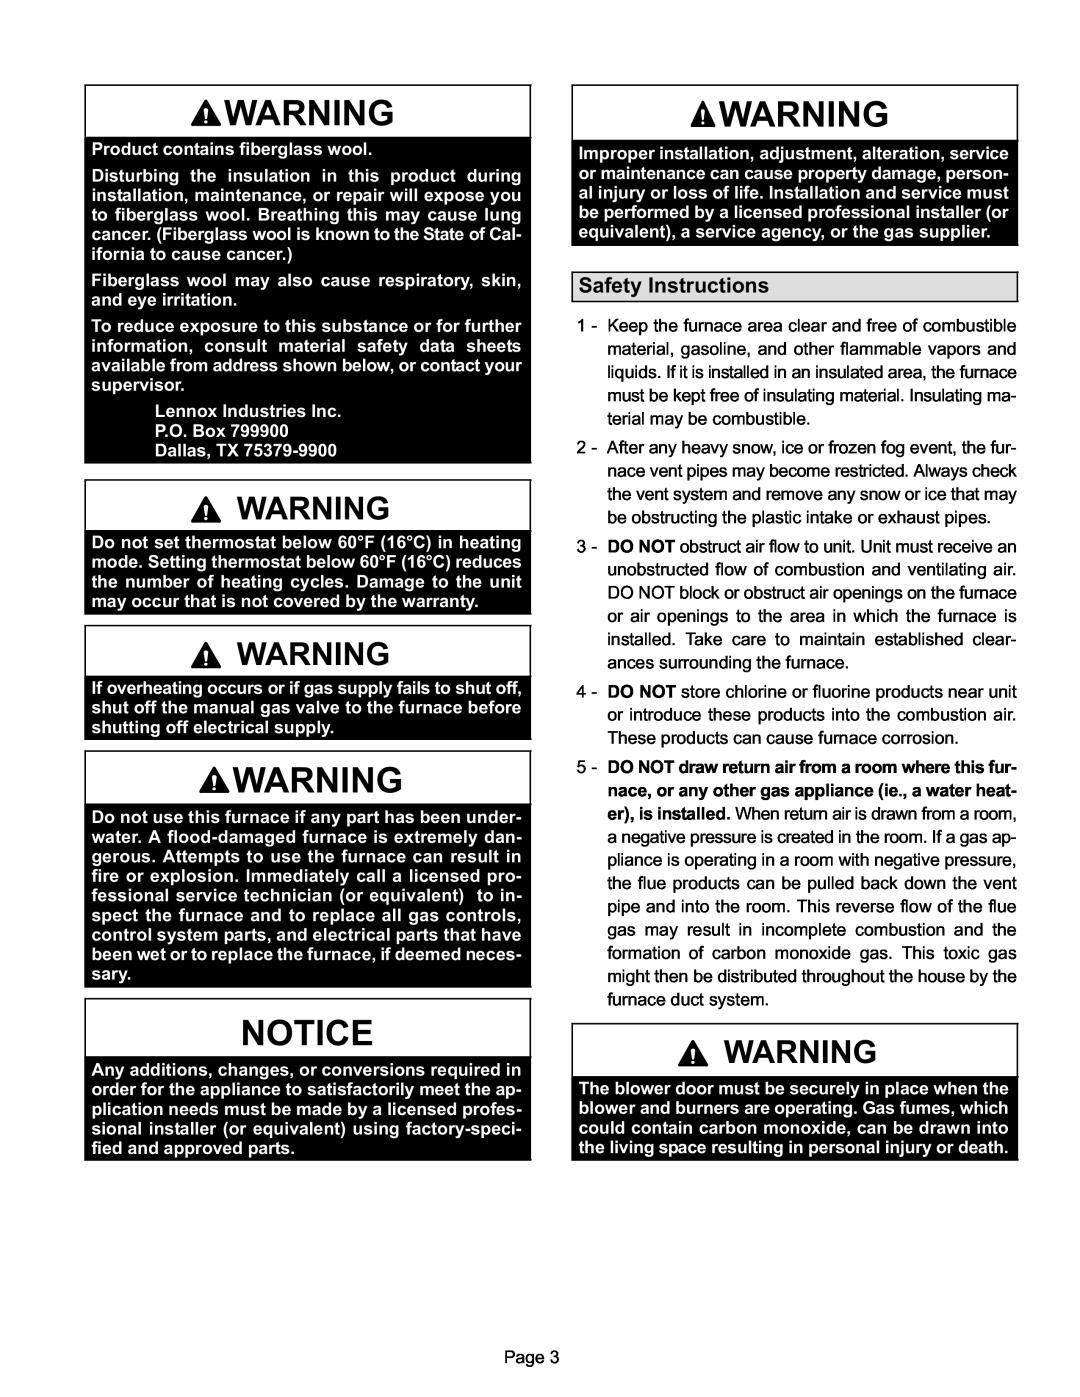 Lennox International Inc Gas Furnace manual Safety Instructions 